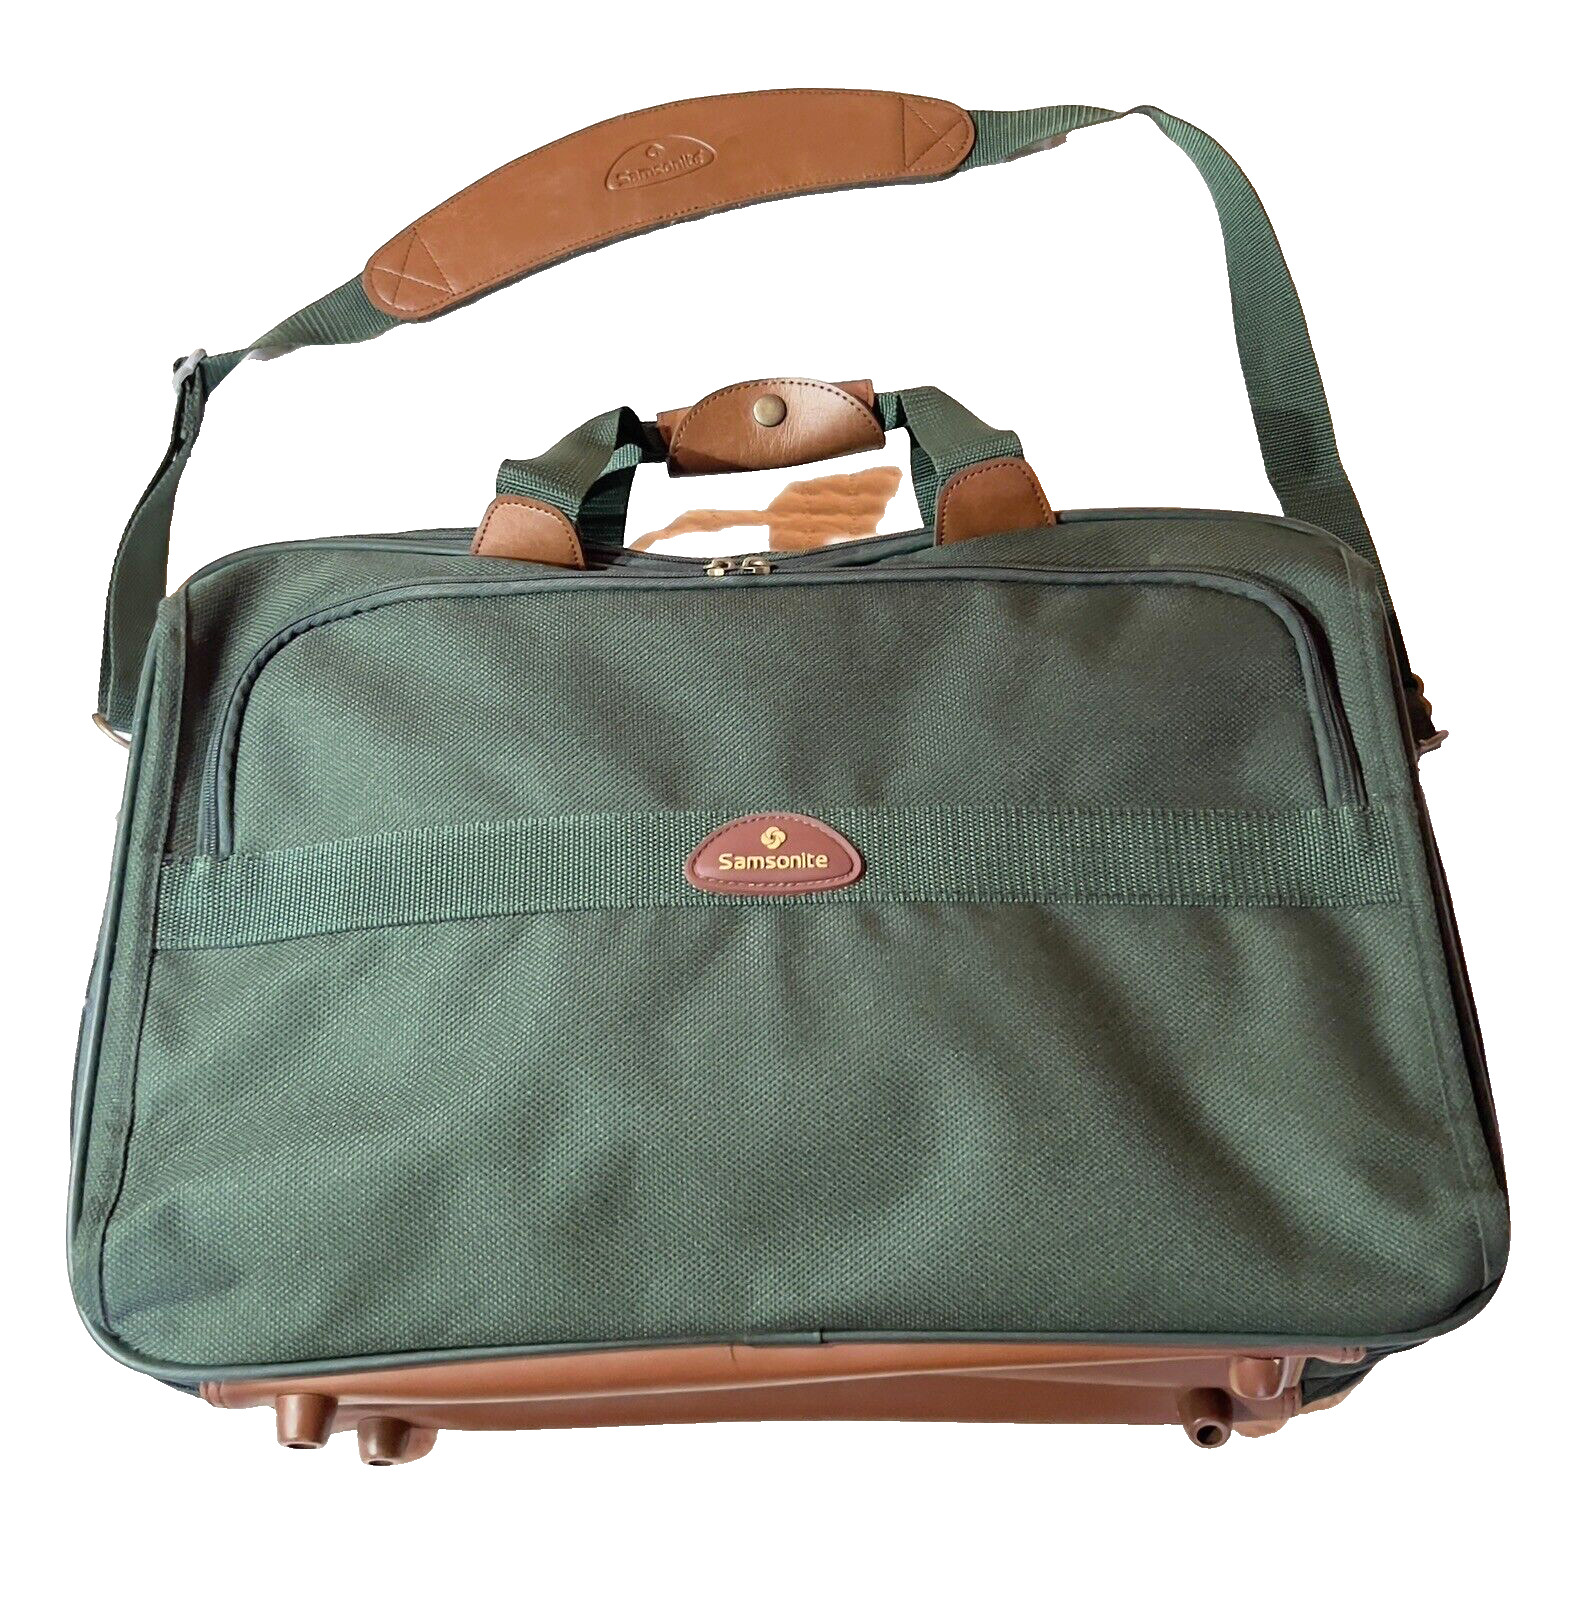 VTG Samsonite Shoulder Carry Laptop Bag Green Brown Nylon 20In x 13In ZipBag